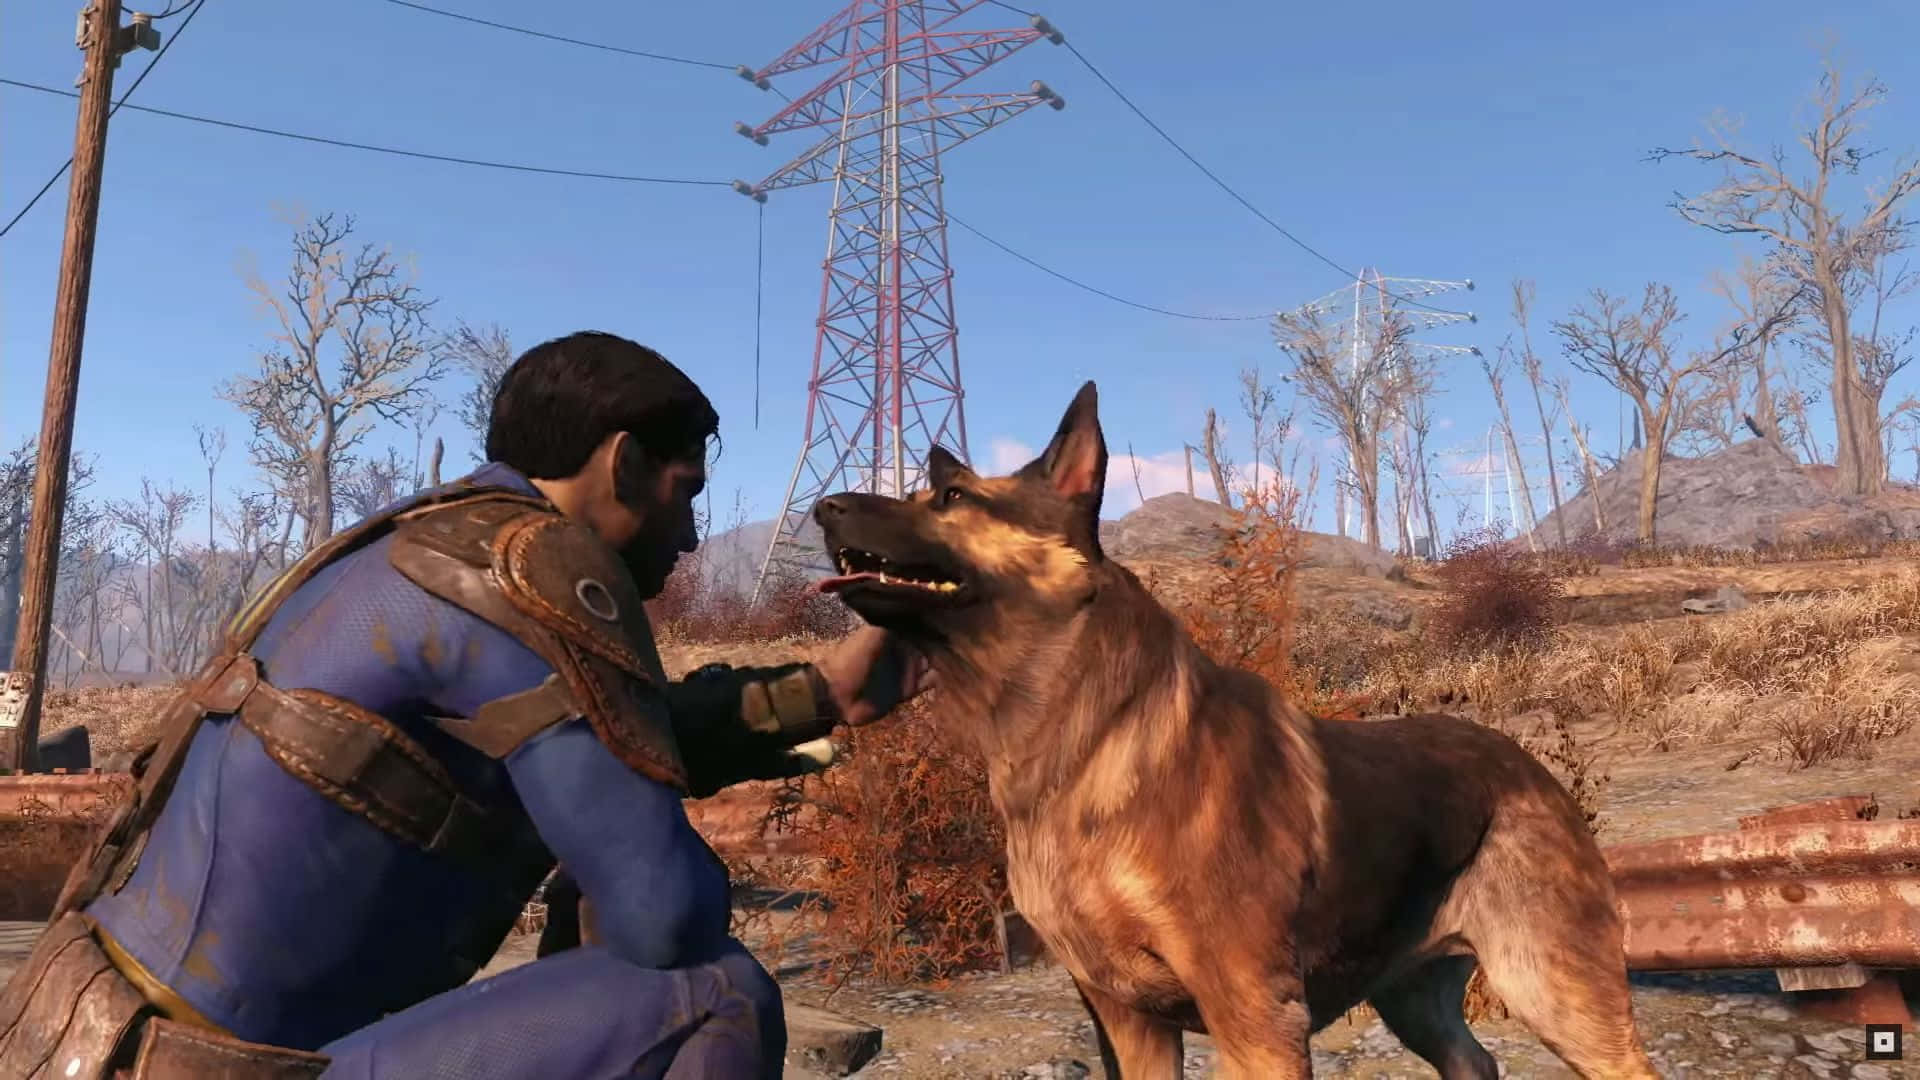 Download Fallout 4's Loyal Companion: Dogmeat Wallpaper | Wallpapers.com